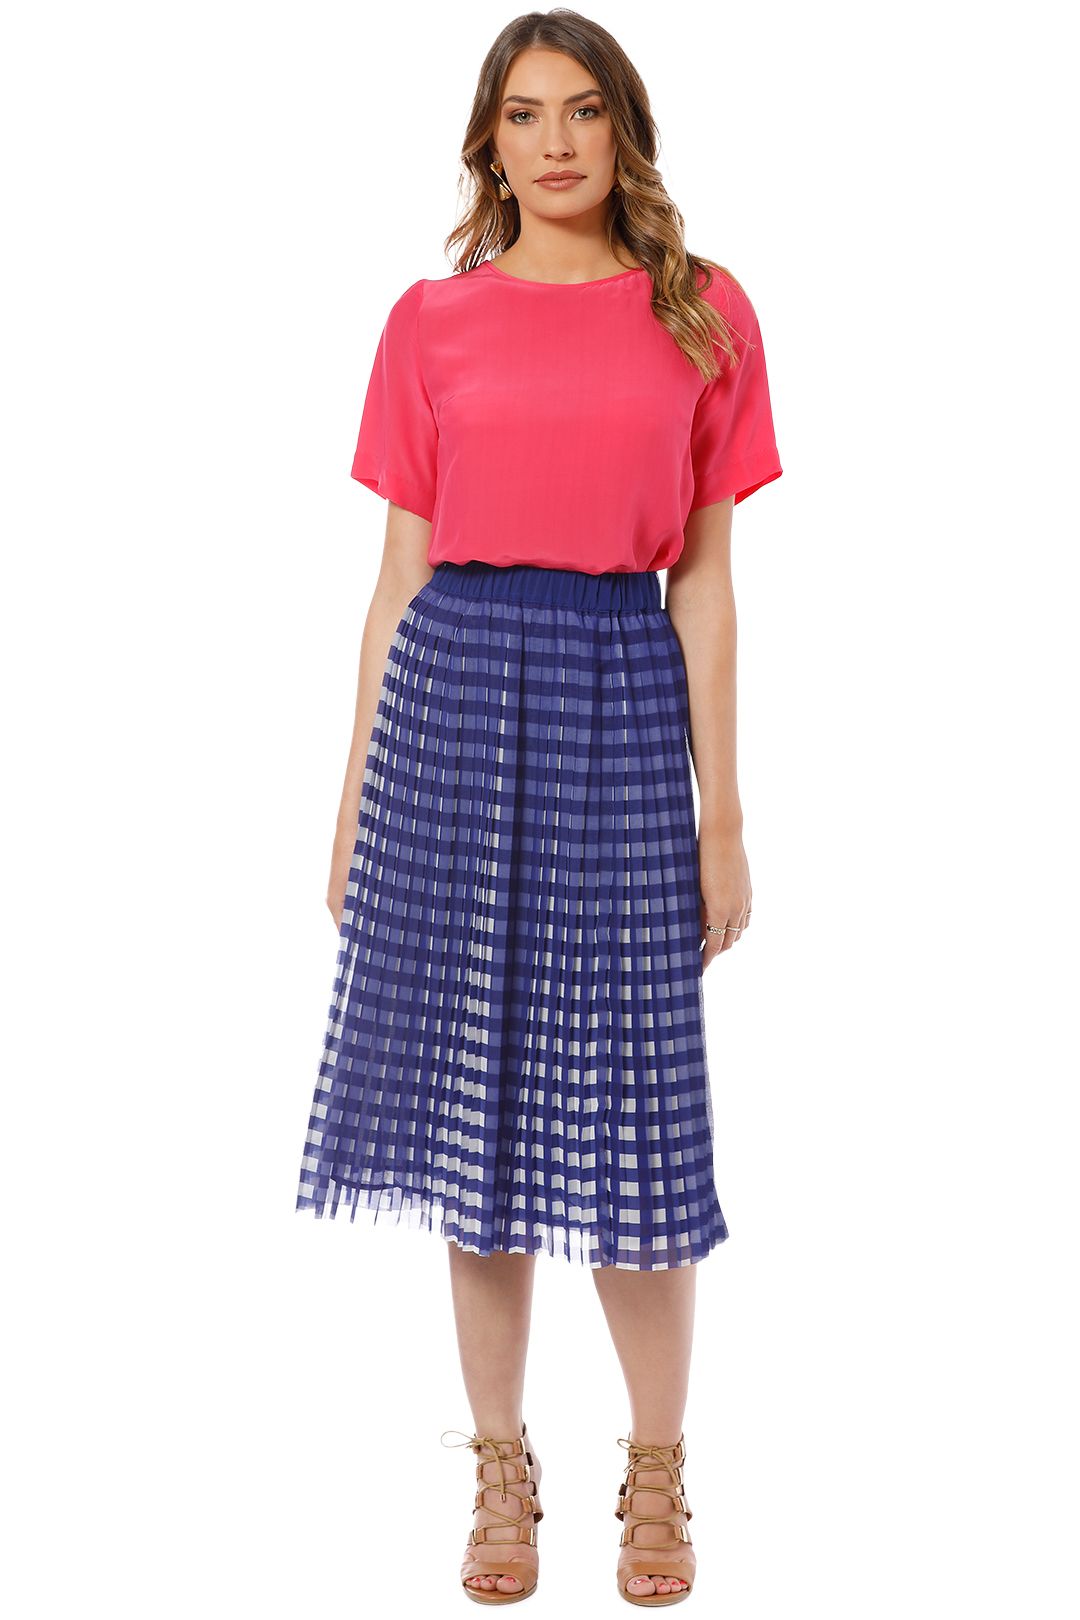 Gorman - Kinetic Pleat Skirt - Blue - Front